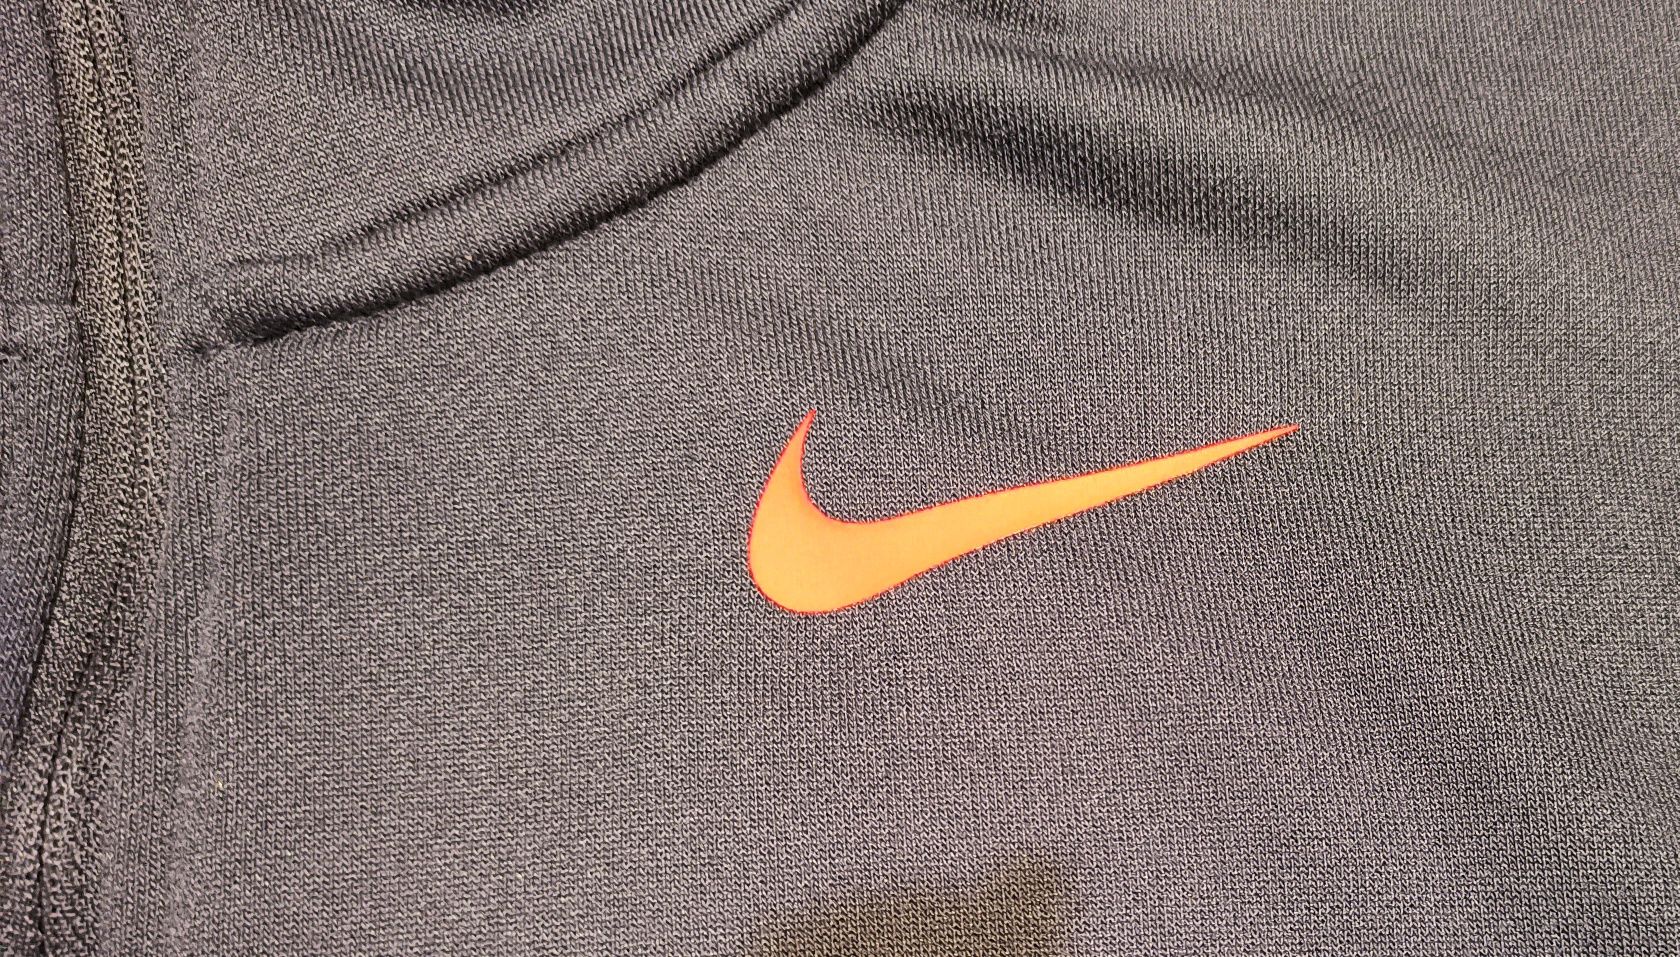 Bluza z kapturem Nike Dri - Fit, XS, S, oryginał